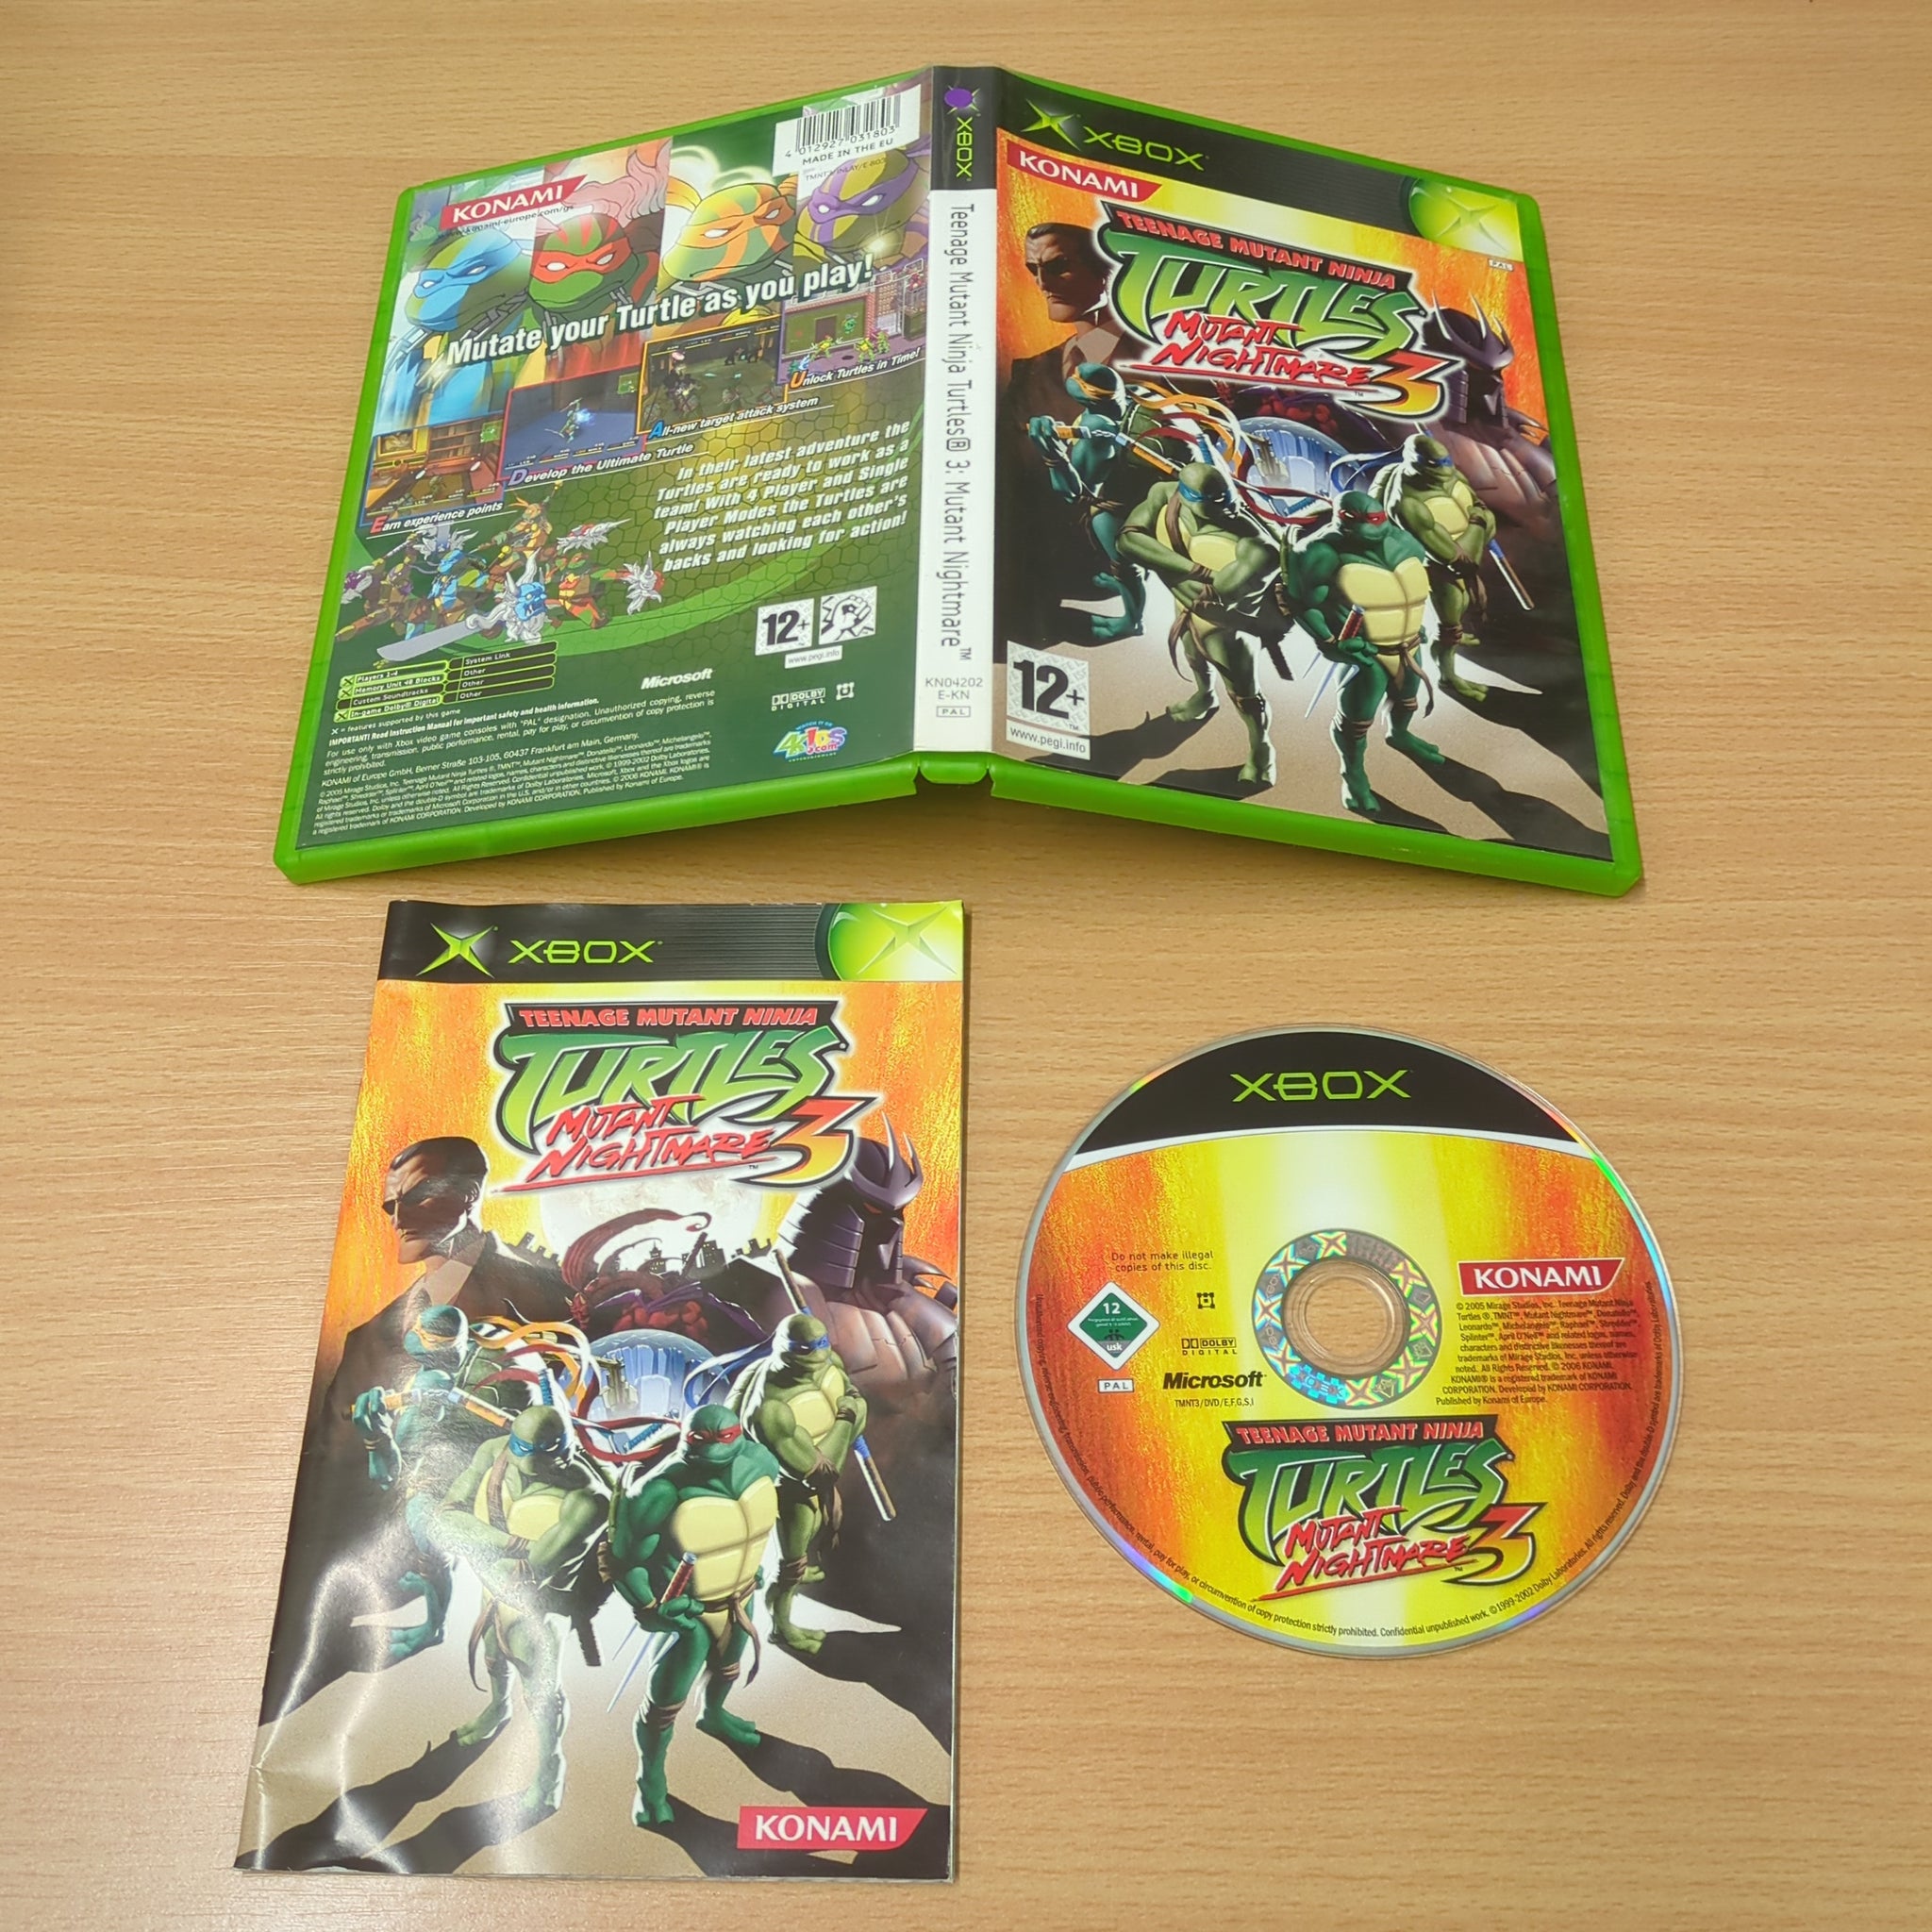 Teenage Mutant Ninja Turtles 3: Mutant Nightmare original Xbox game